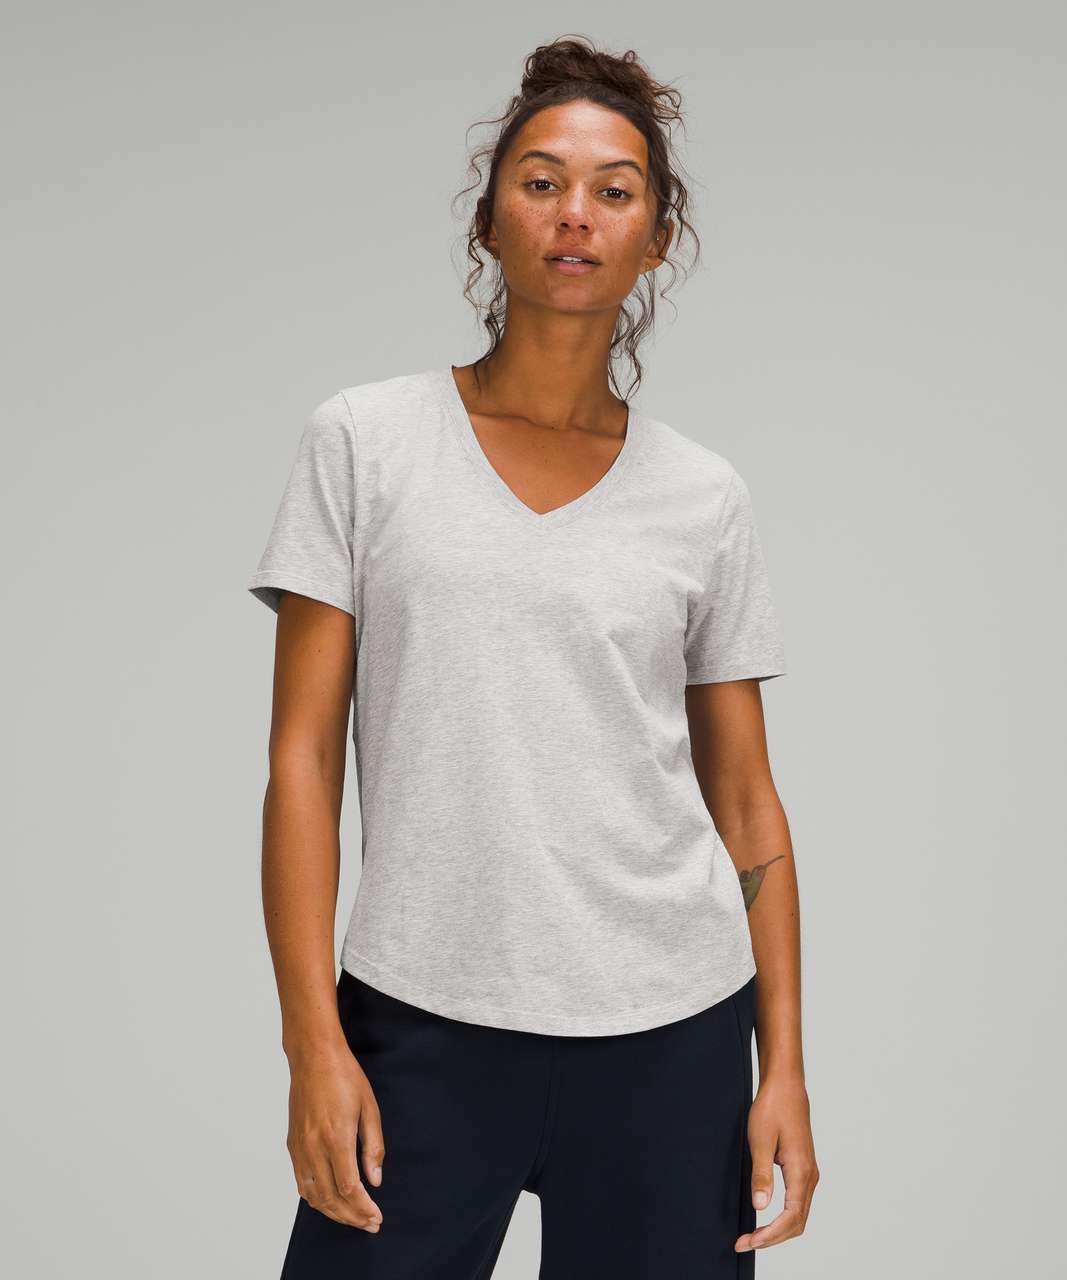 Lululemon Love Tee Short Sleeve V-Neck T-Shirt - Heathered Core 